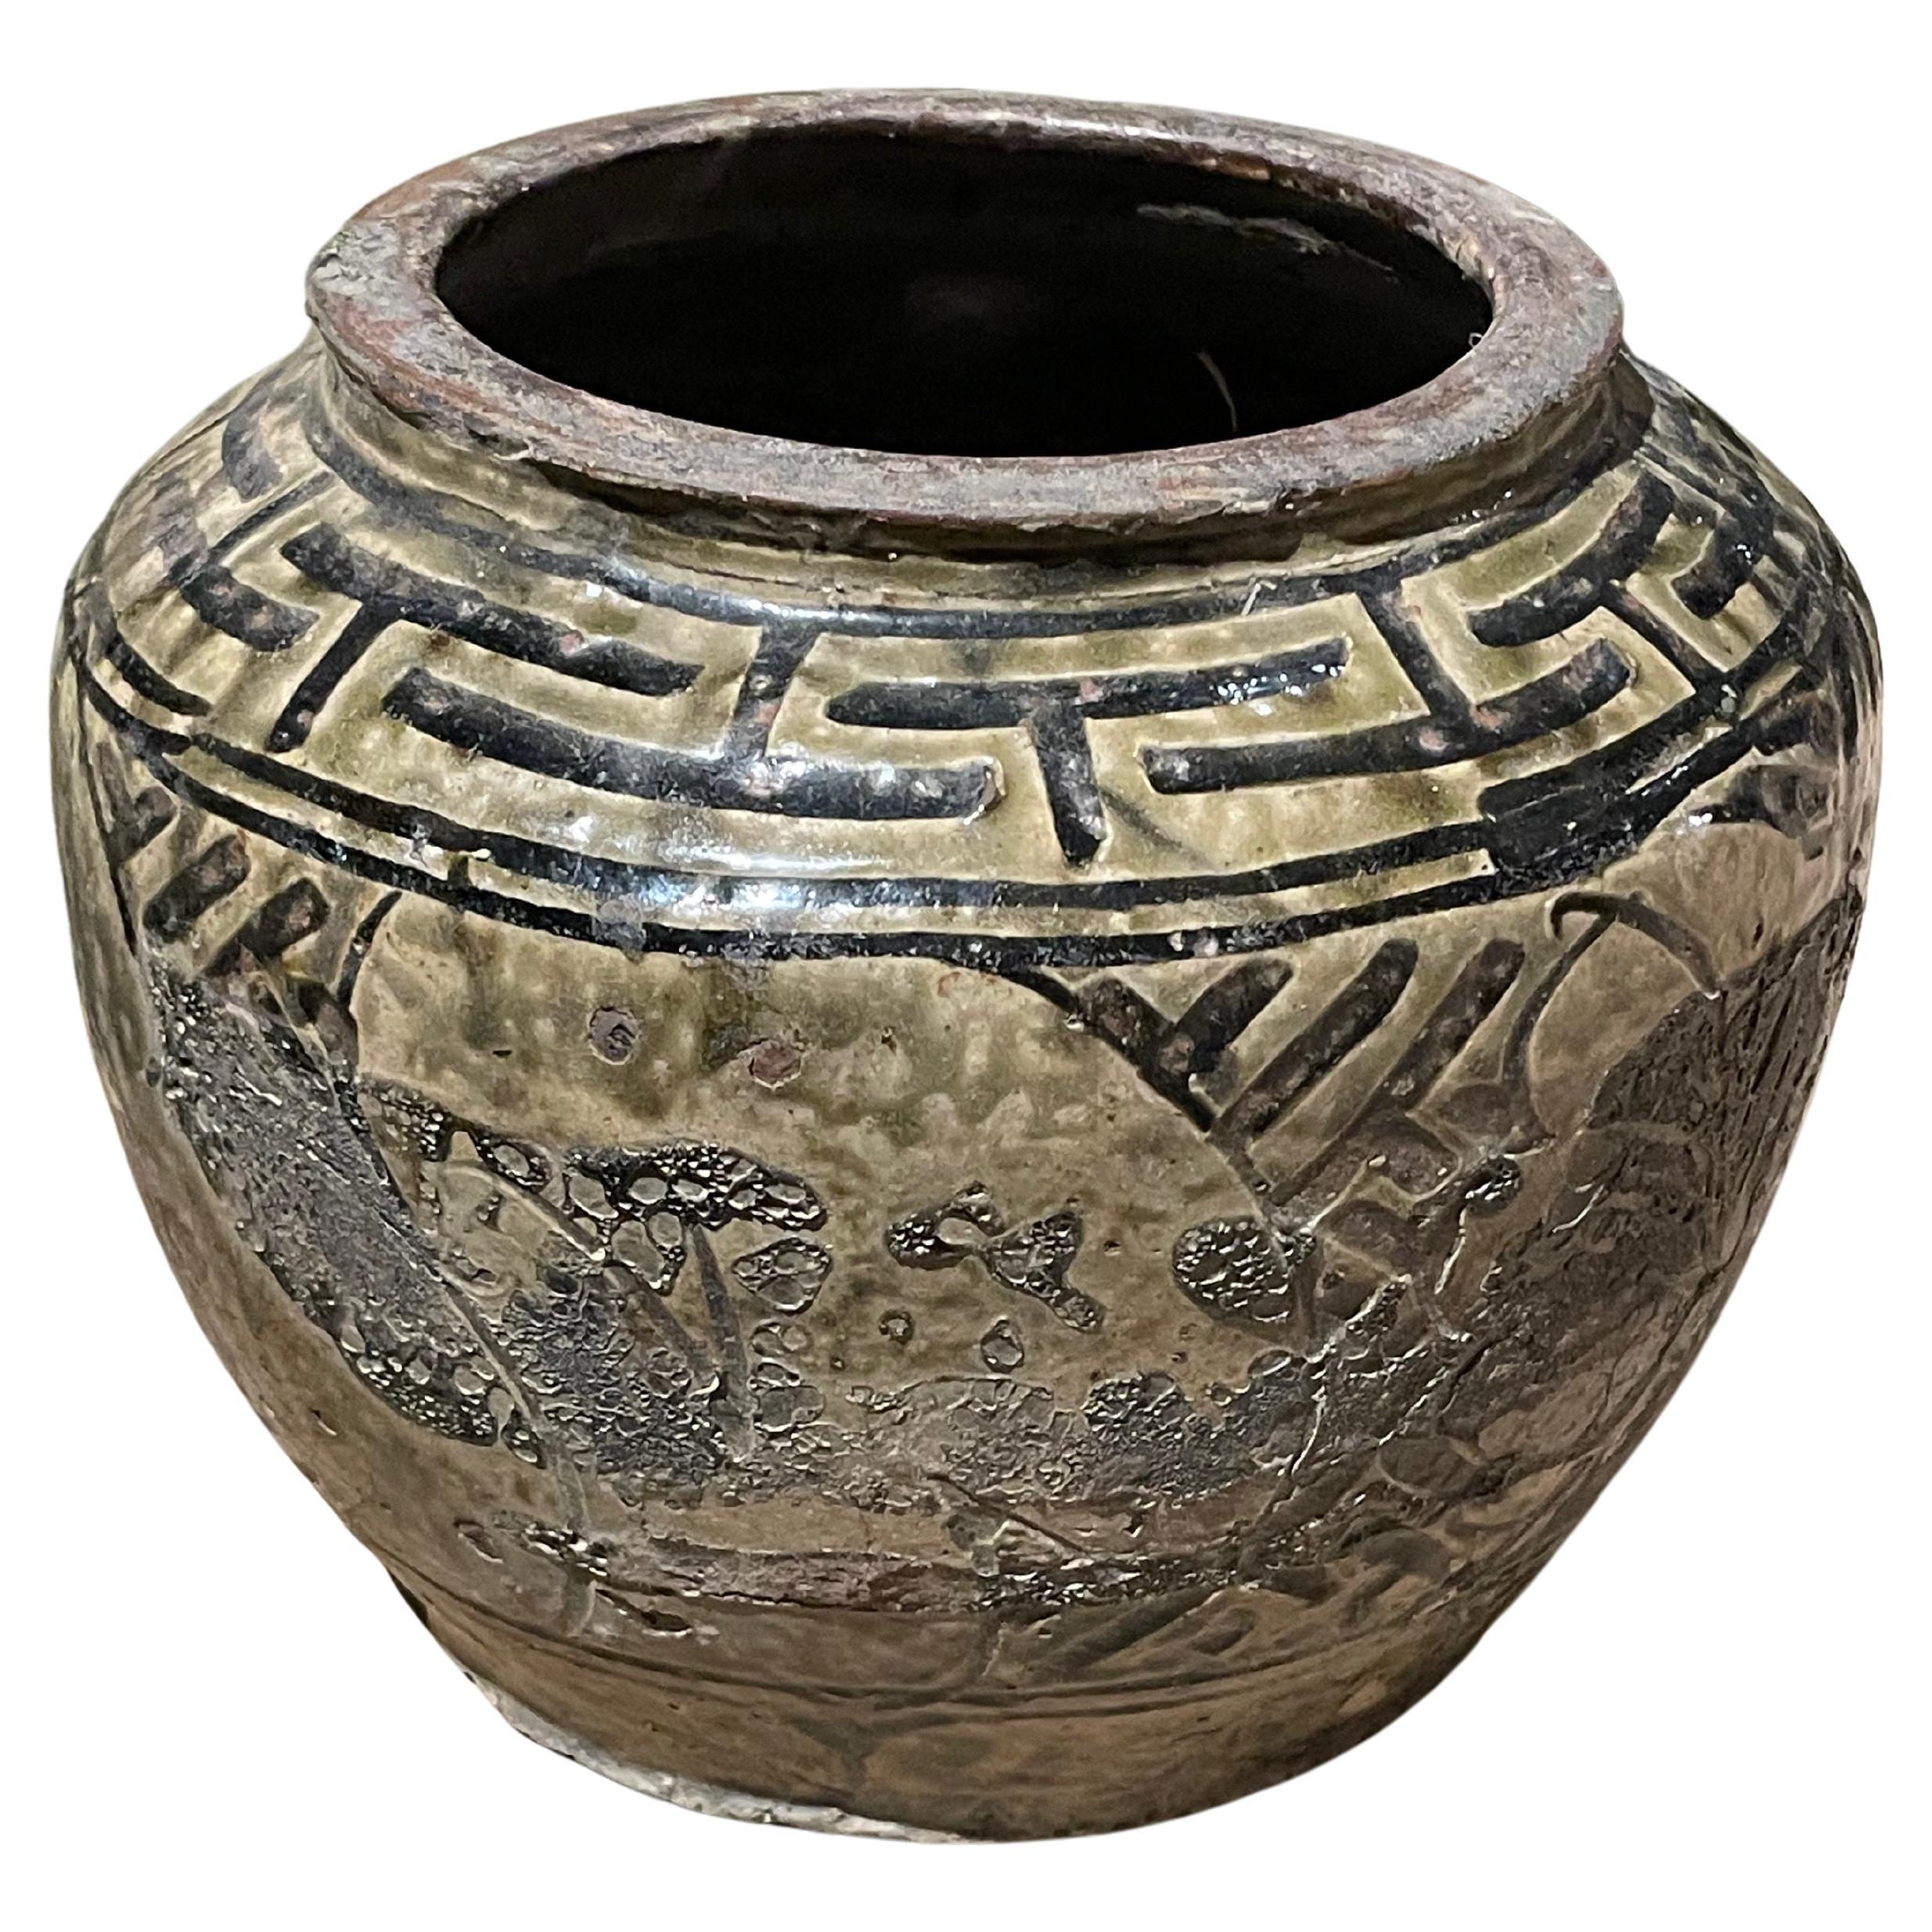 Olive Glazed With Geometric Design Classic Shaped Pot, China, 19th Century